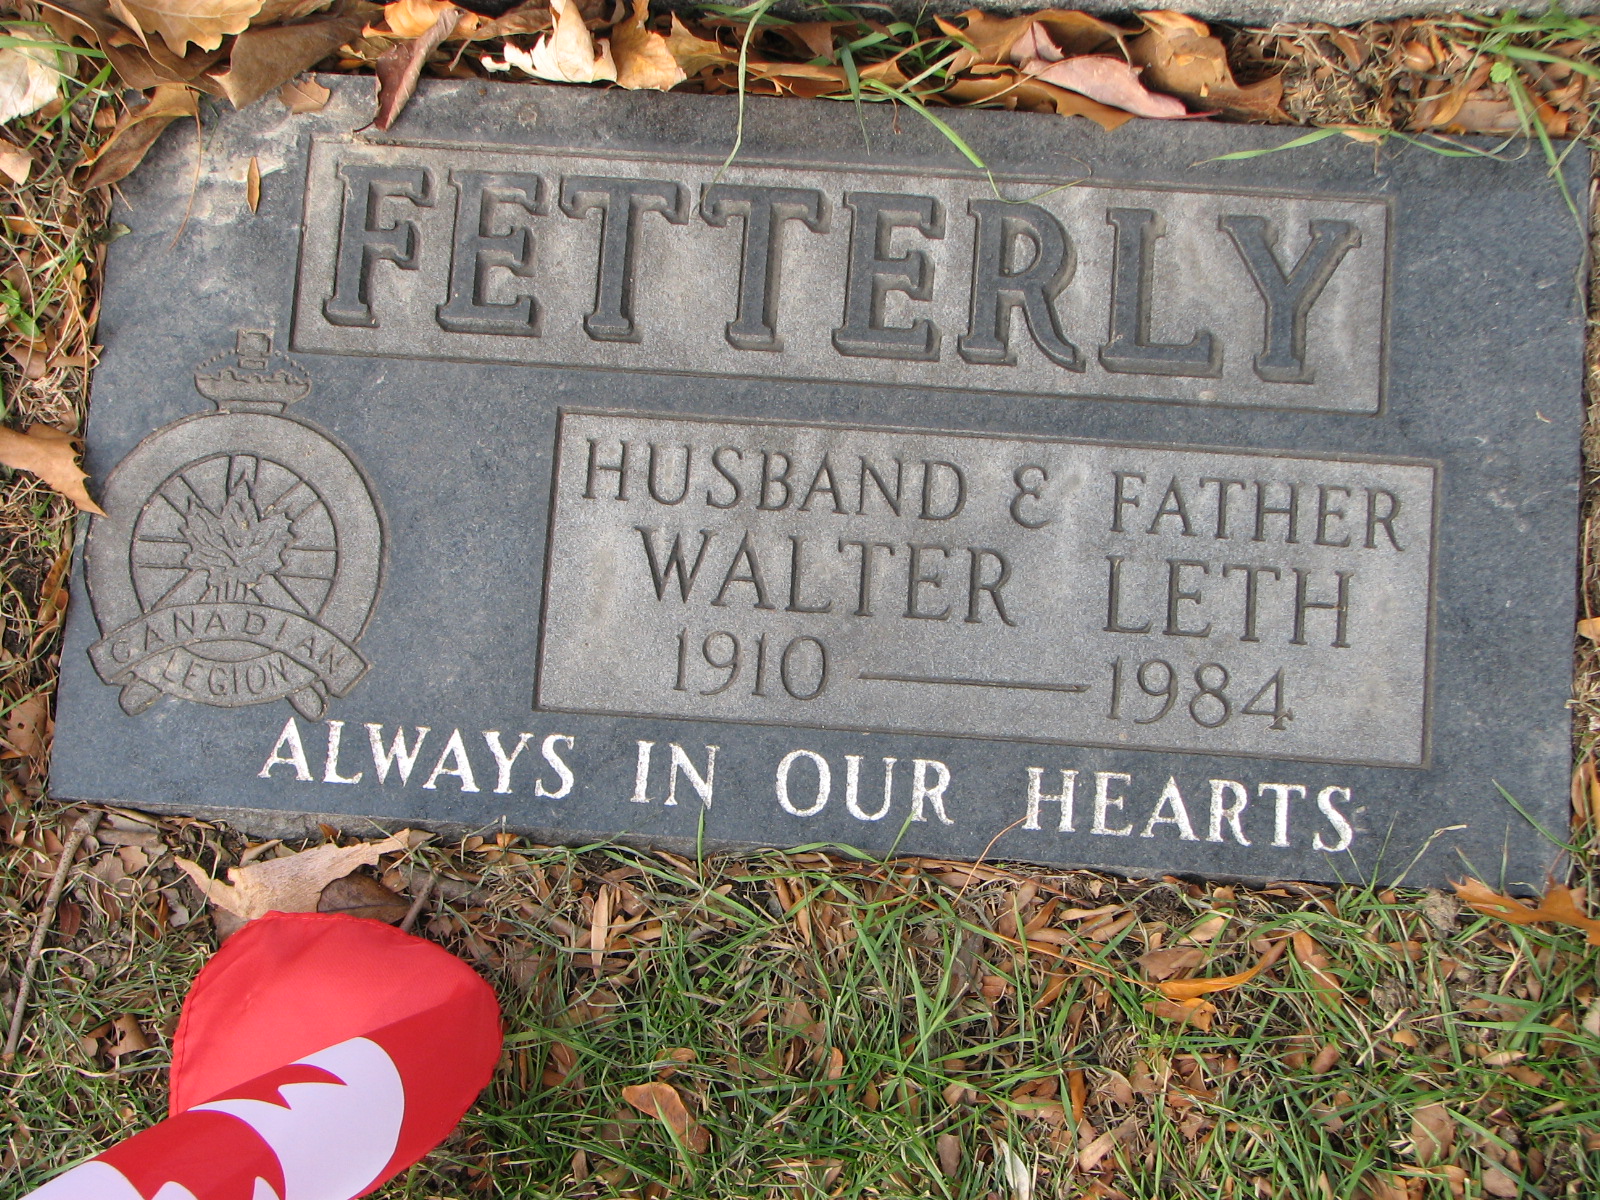 Walter Leth Fetterly 1910-1984